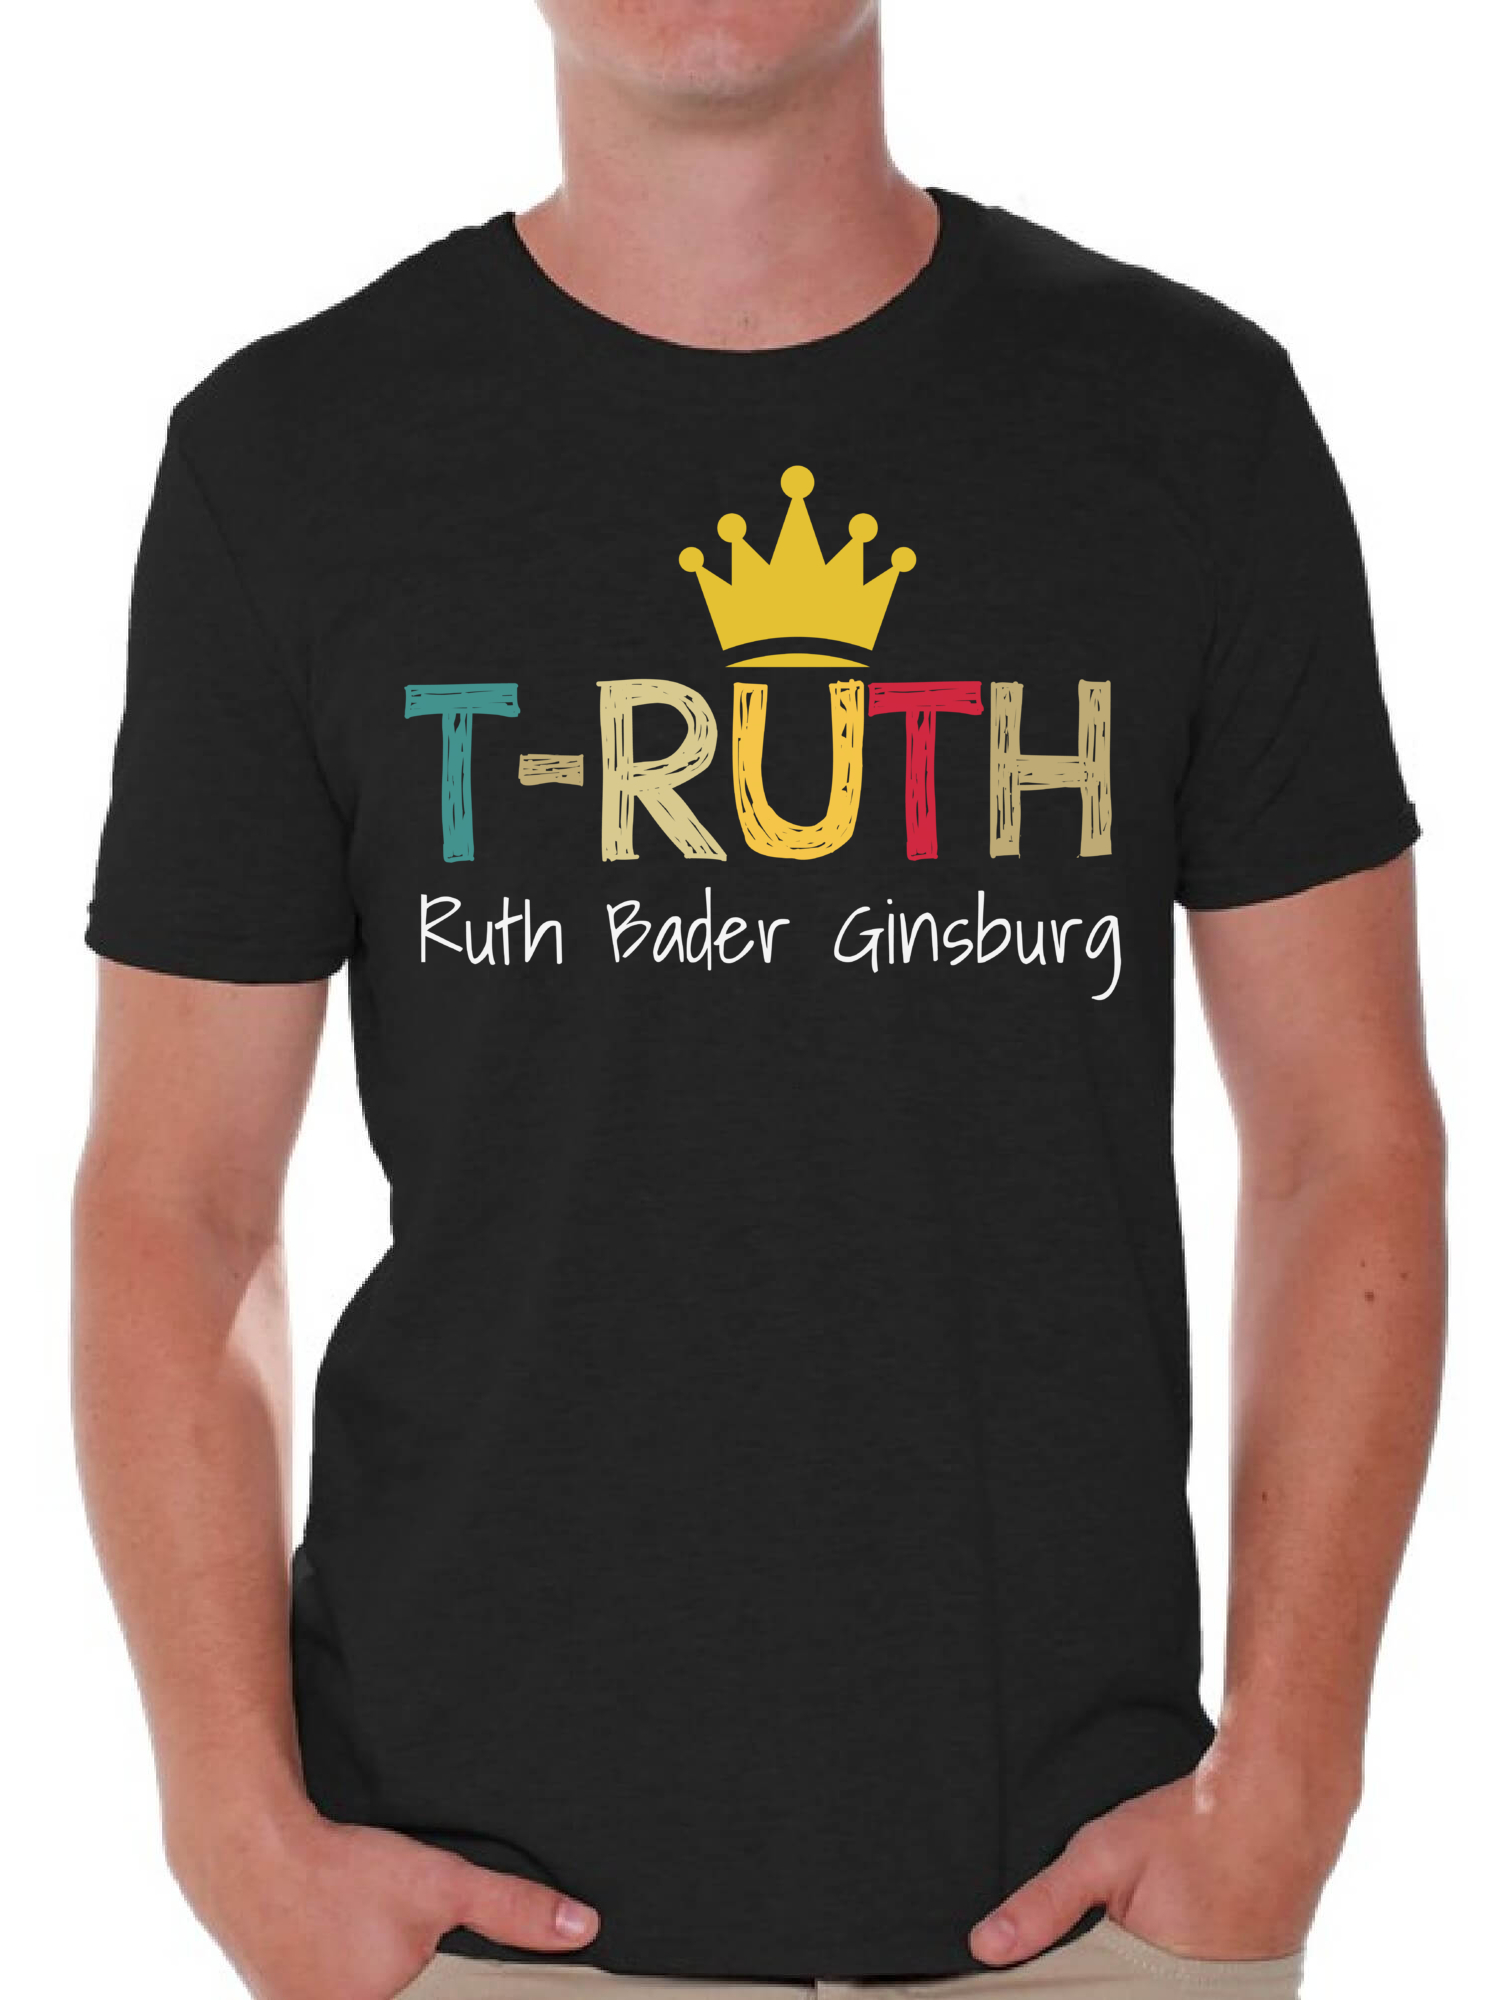 Awkward Styles Ruth Bader Ginsburg Shirt for Men T-RUTH Notorious Shirt RBG T Shirt Mens Support Women Empowerment T-shirt - image 1 of 4